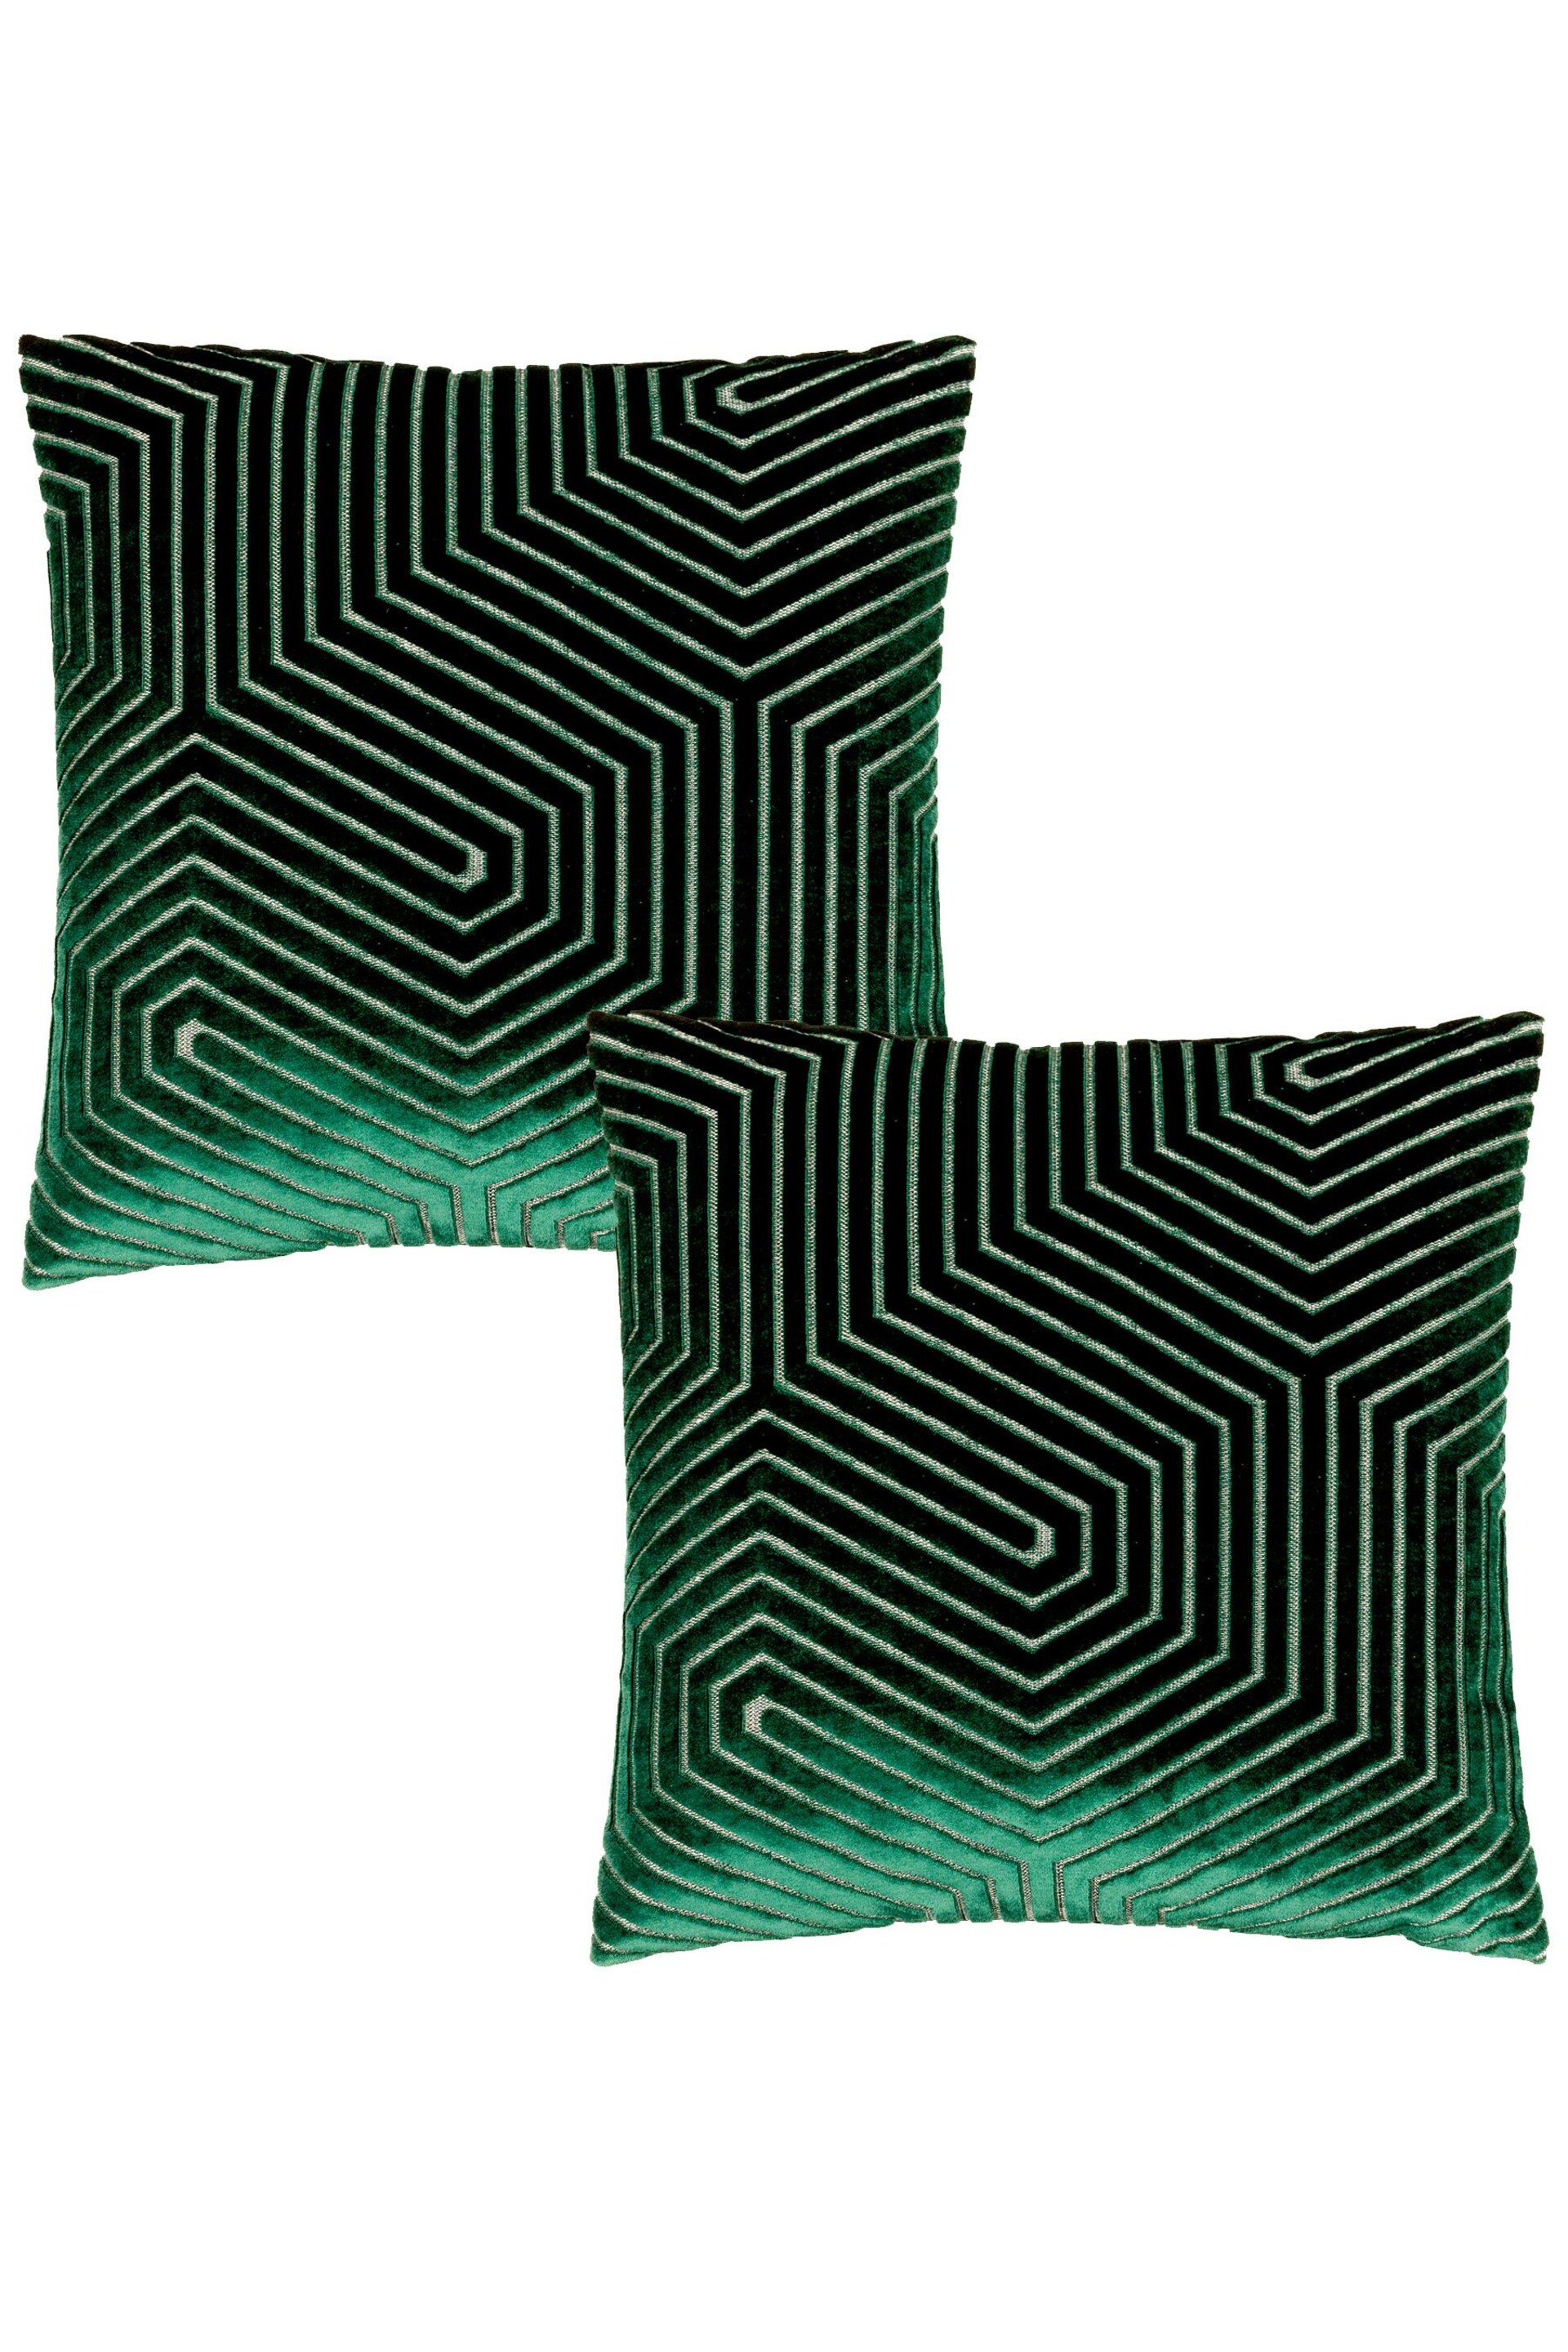 Riva Paoletti 2 Pack Green Evoke Geometric Cut Velvet Cushions - Image 1 of 6